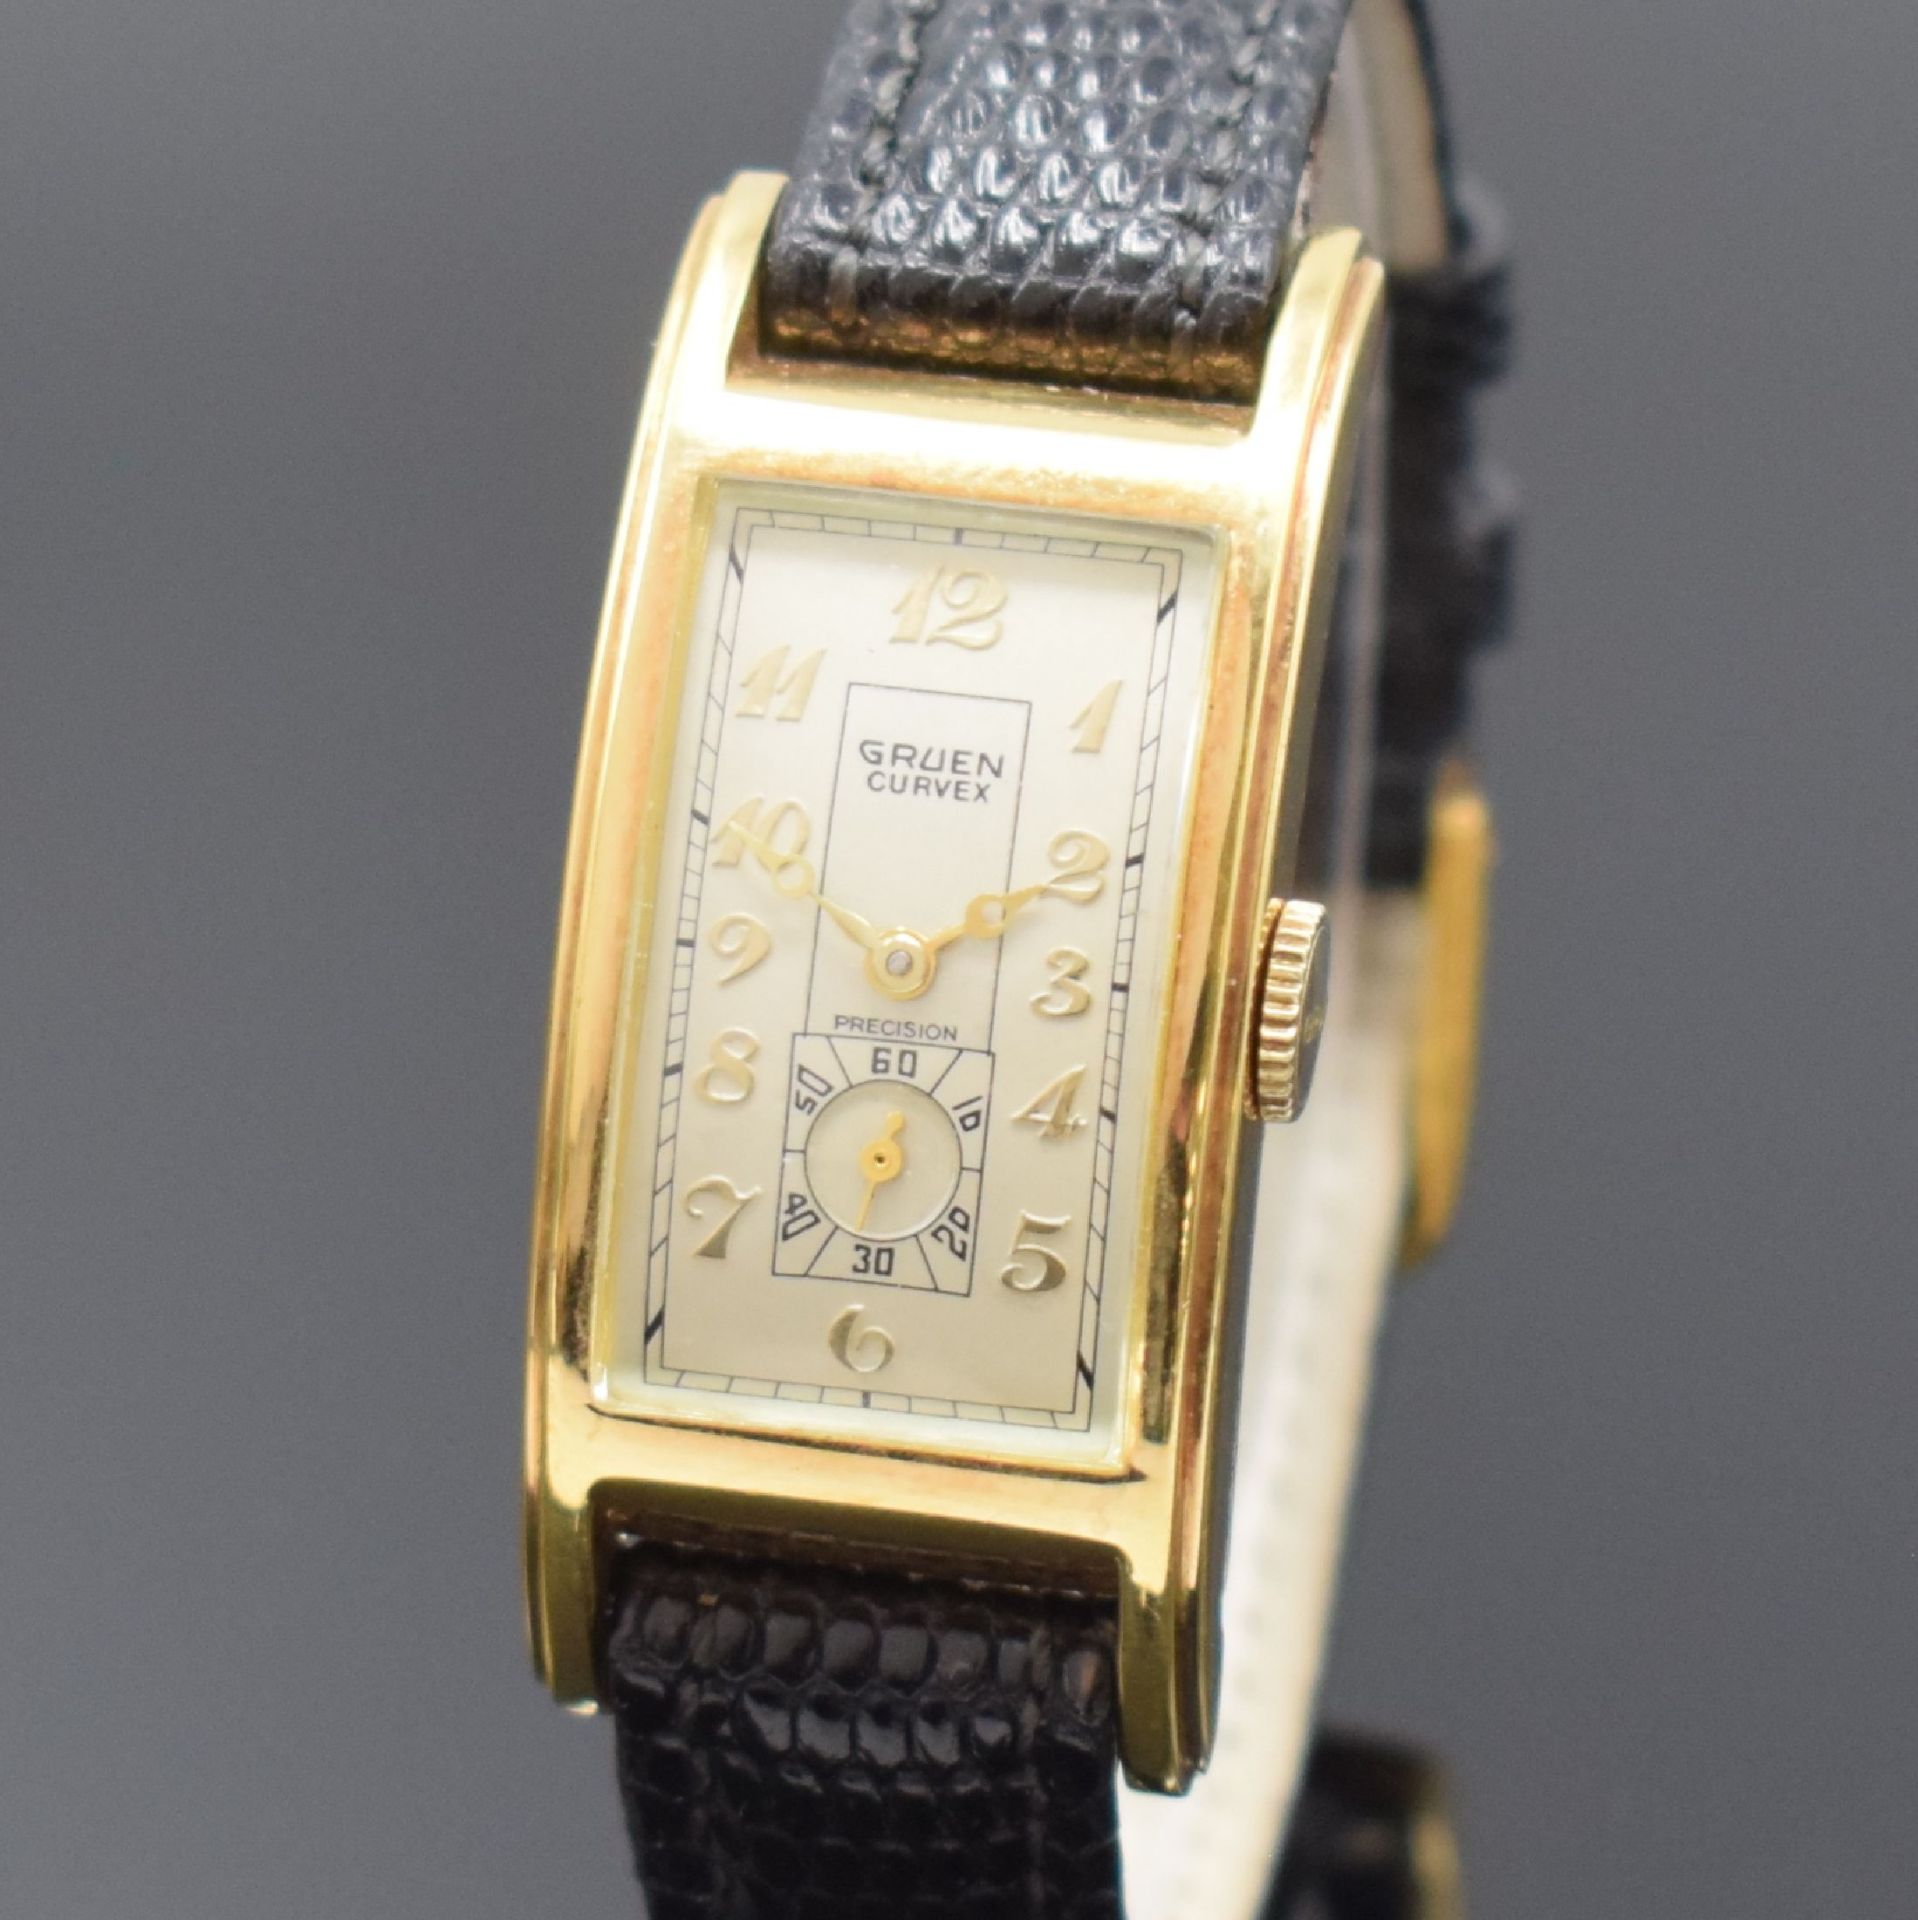 GRUEN Curvex Precision Armbanduhr, Handaufzug, Schweiz - Bild 2 aus 6